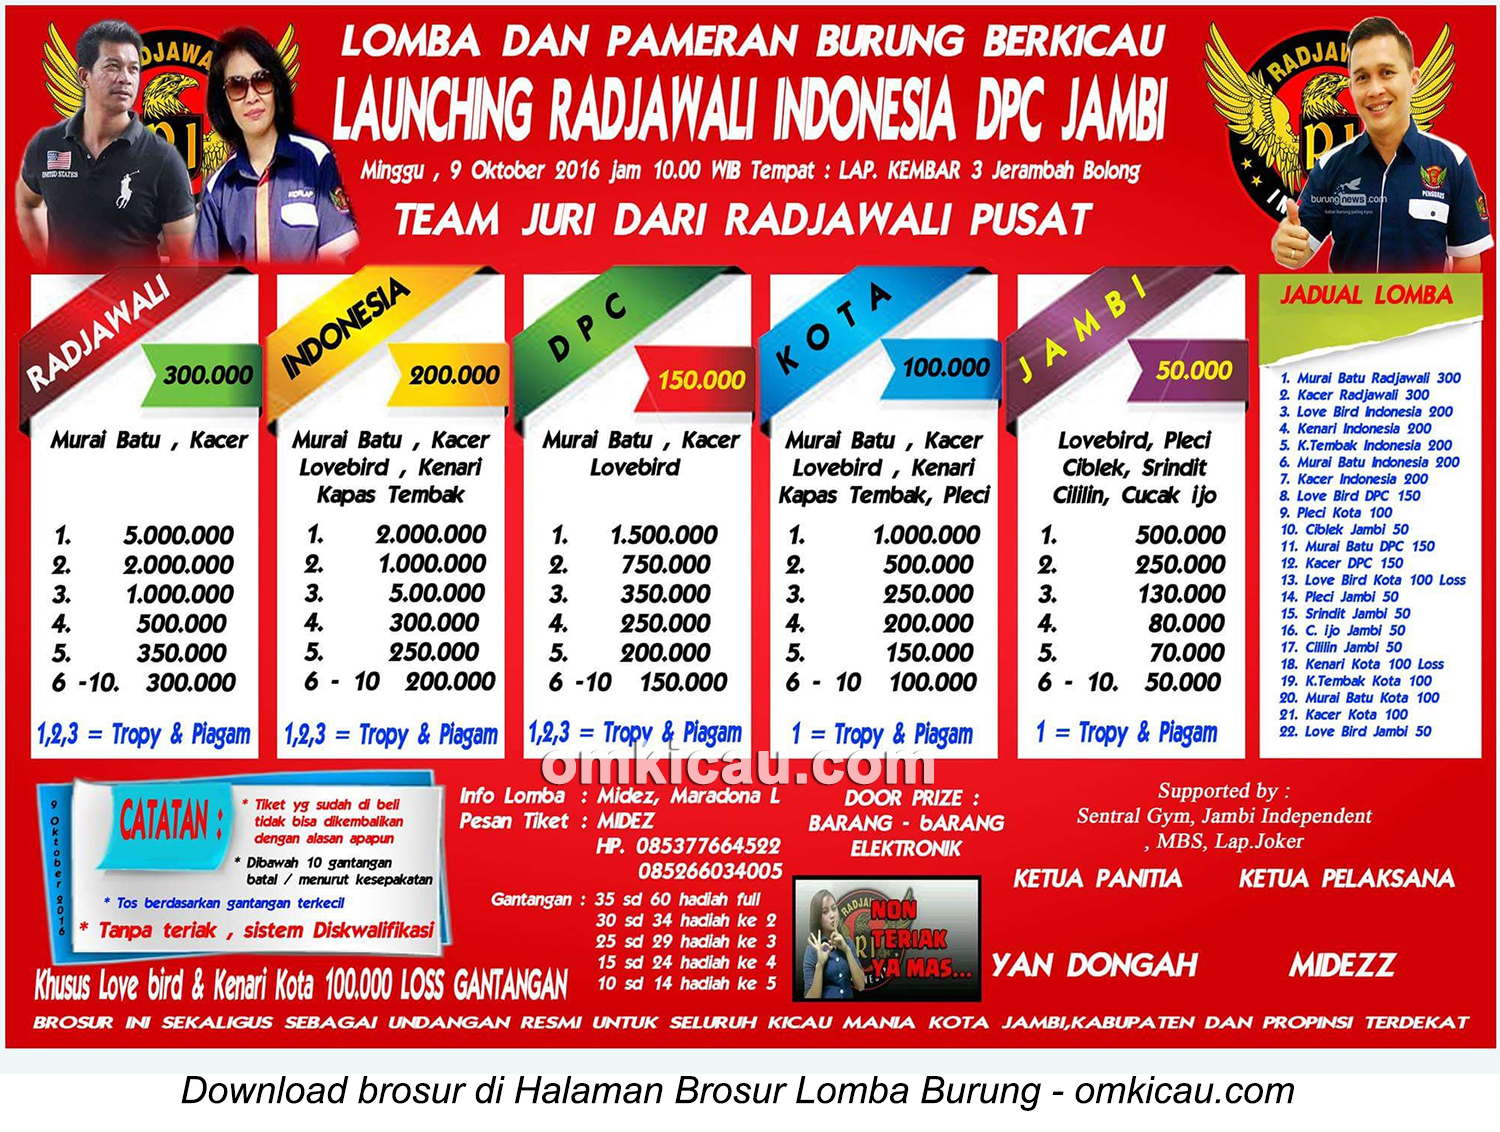 Brosur Lomba Burung Berkicau Launching Radjawali Indonesia DPC Jambi, 9 Oktober 2016